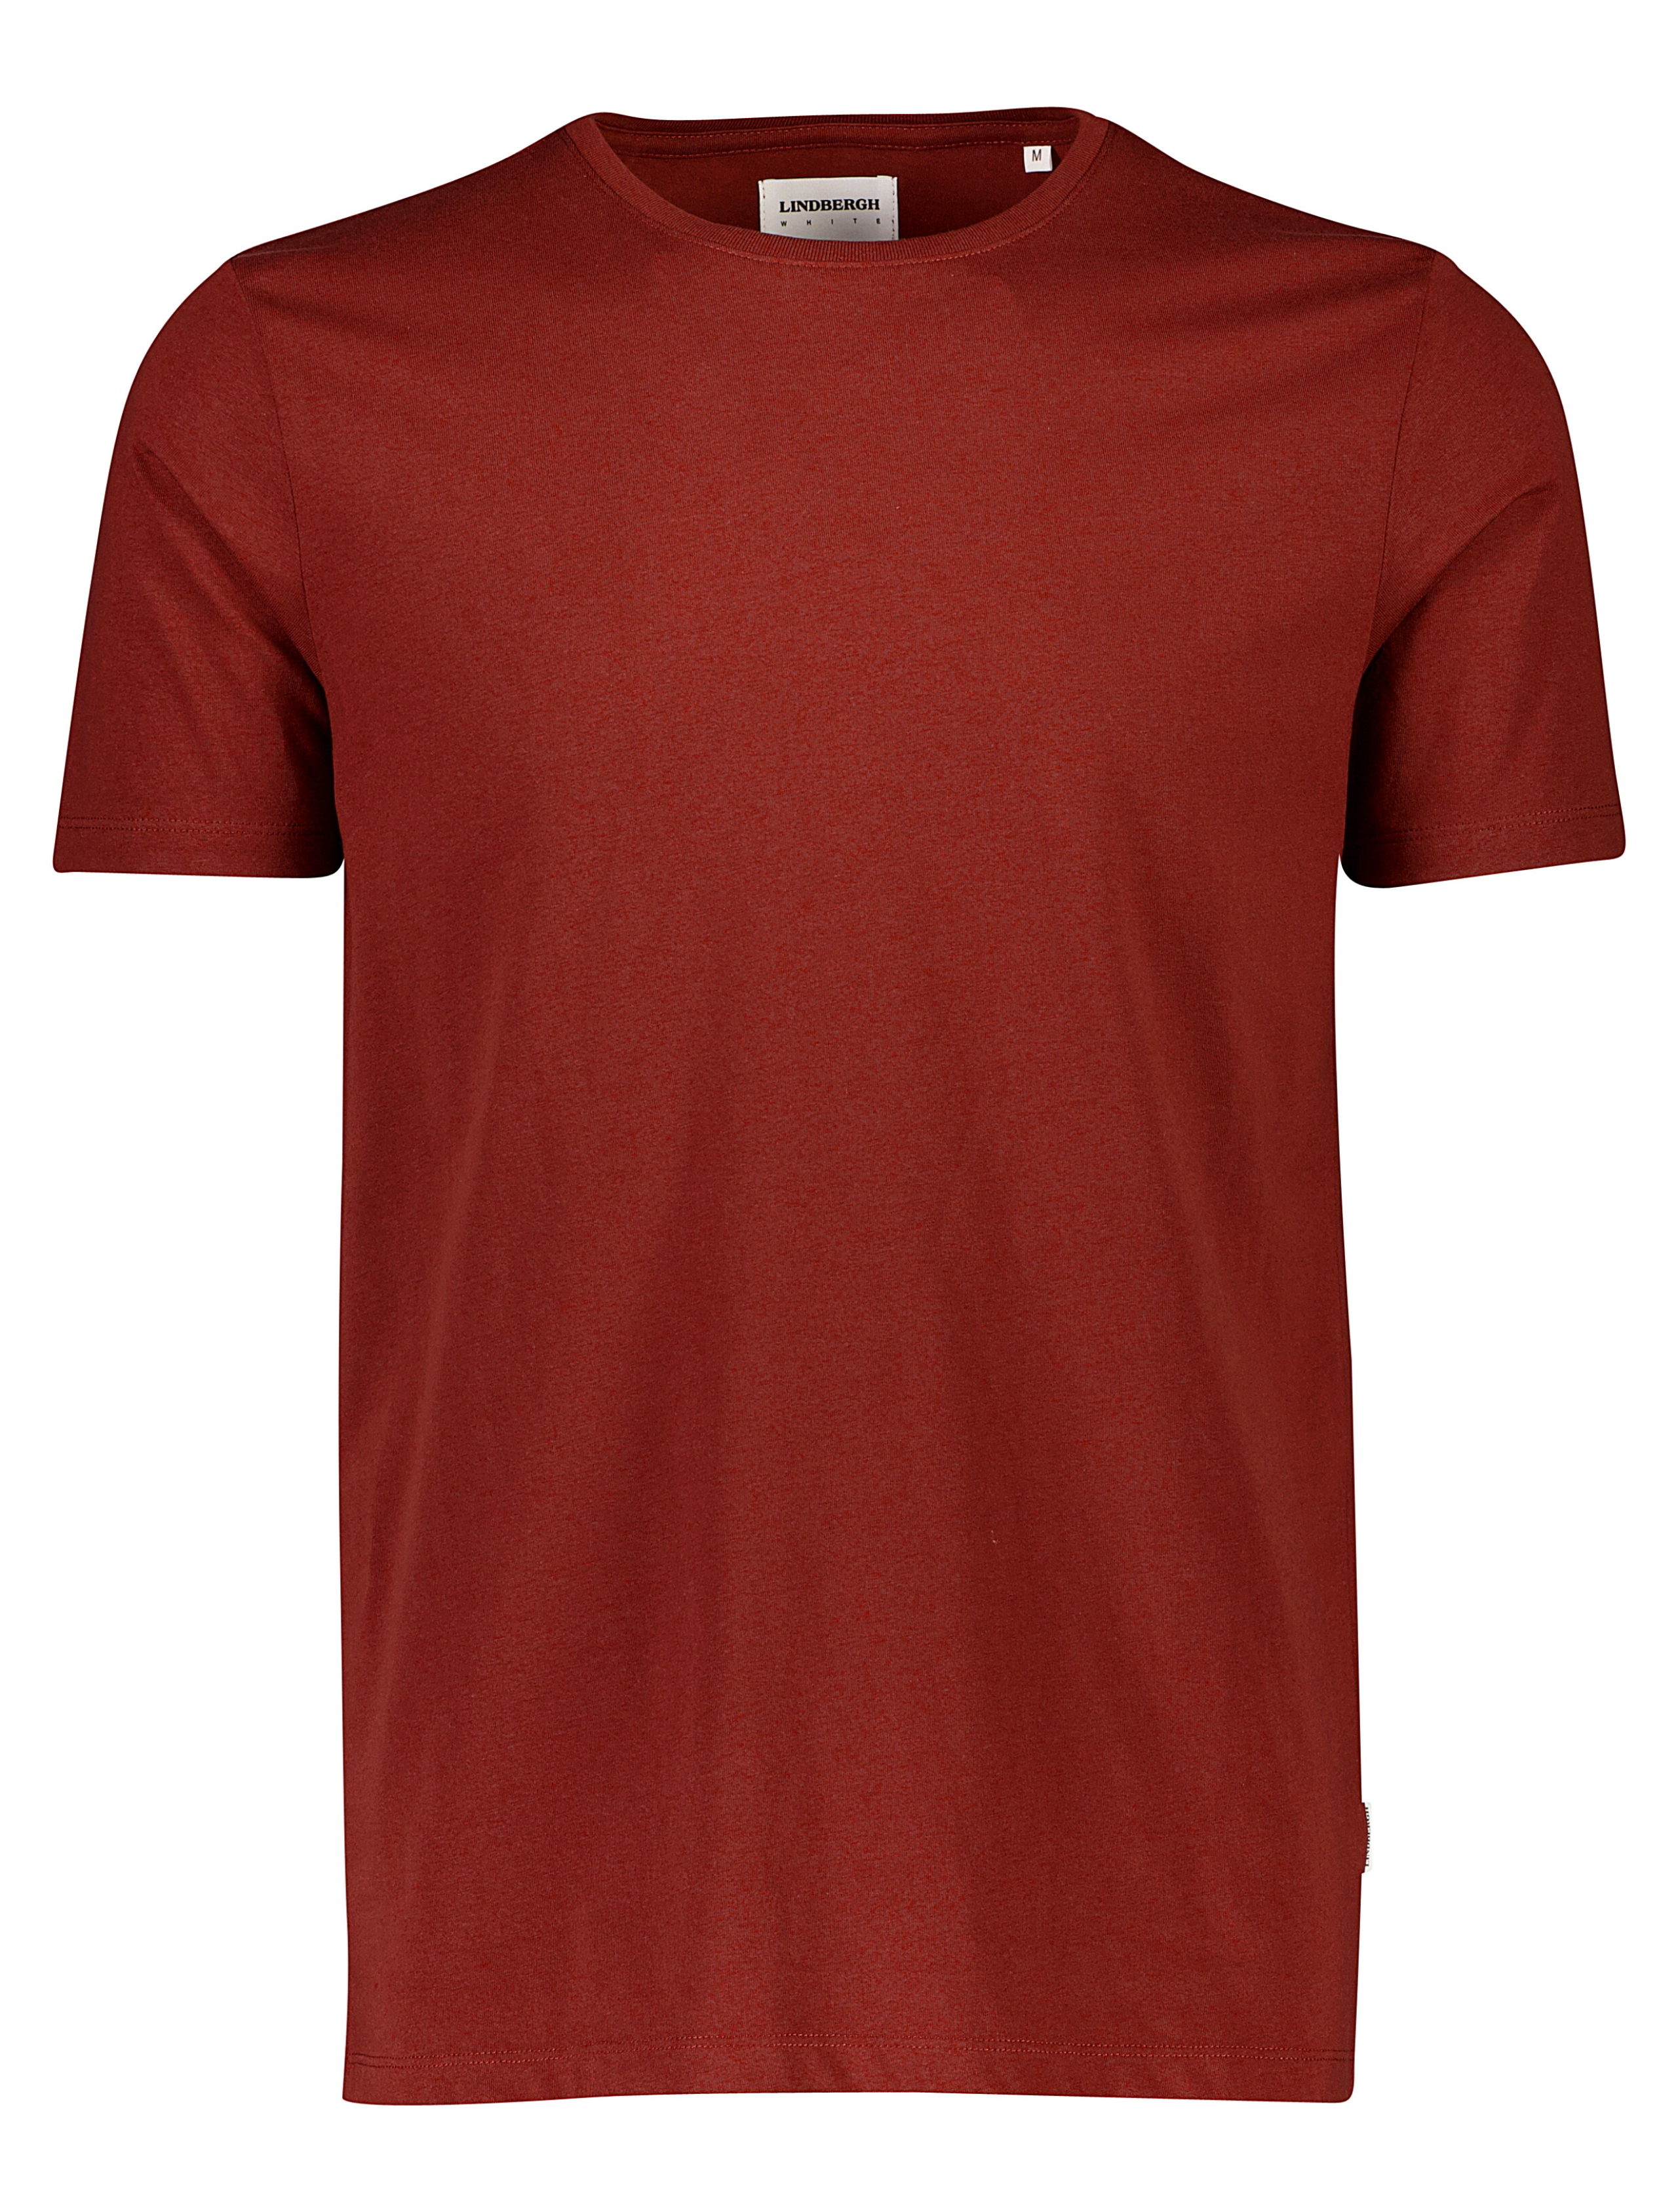 Lindbergh T-shirt röd / burnt red mix